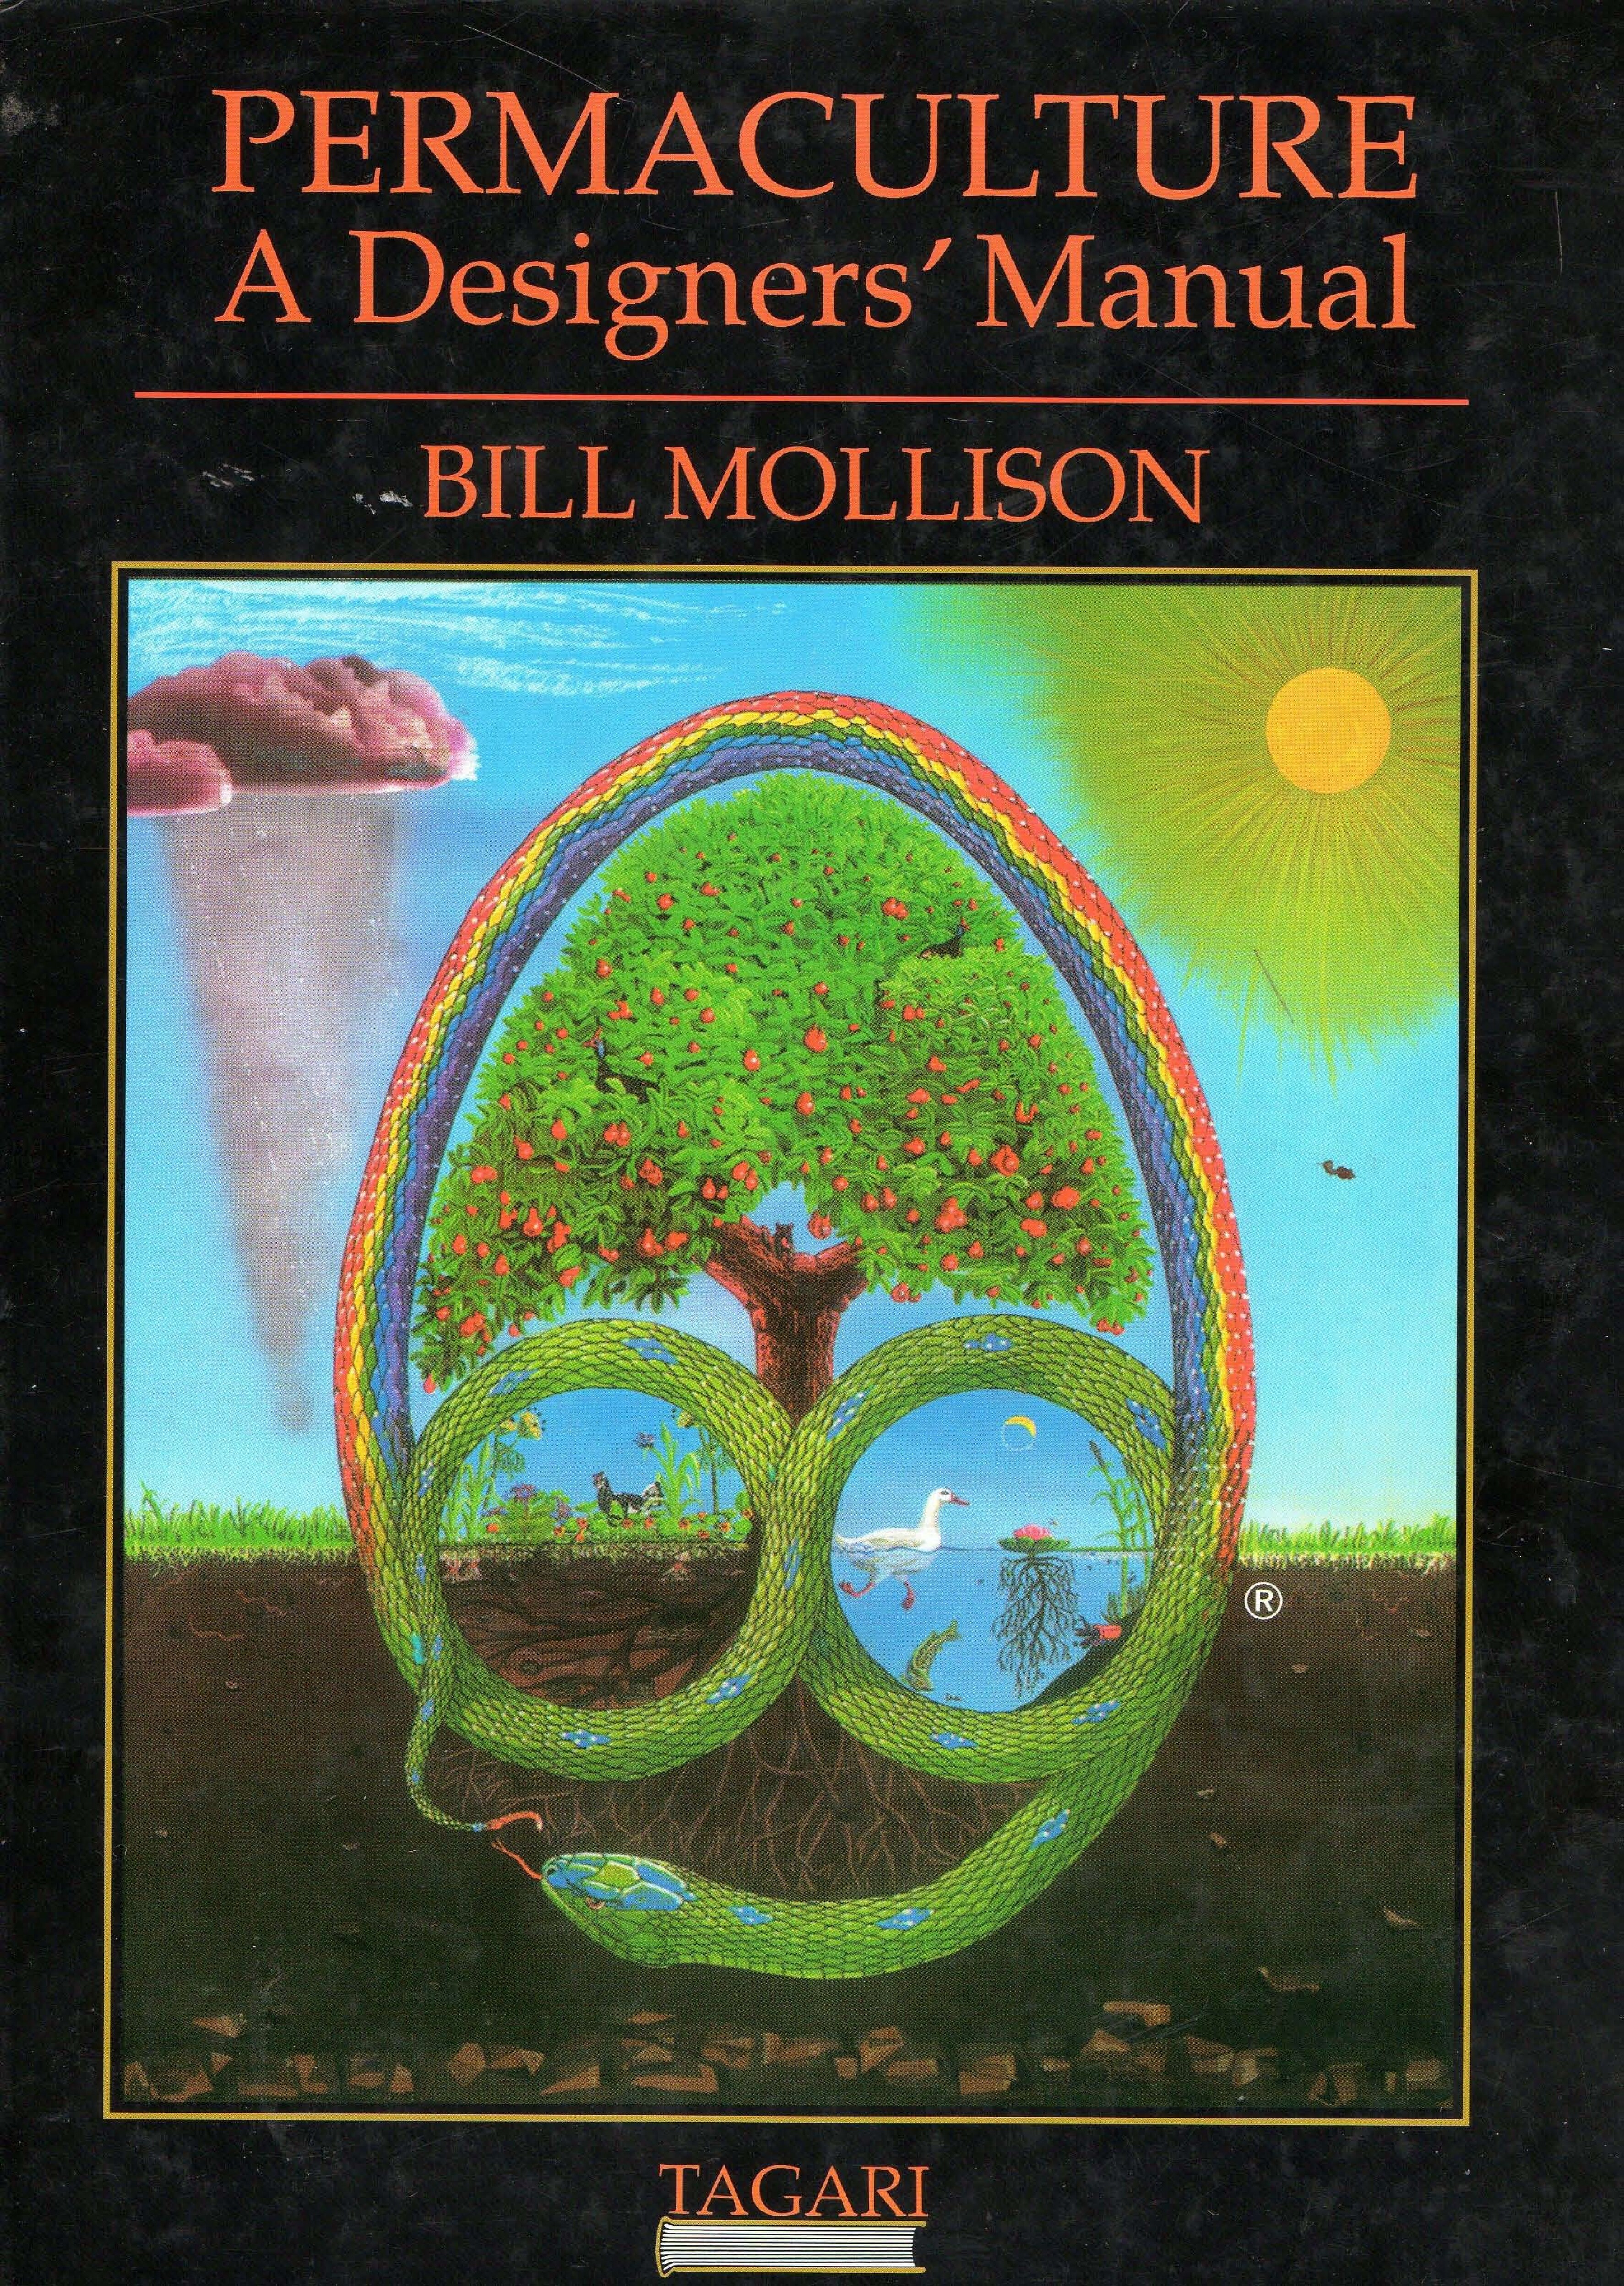 Mollison, Bill; Permaculture, A Designer's Manual